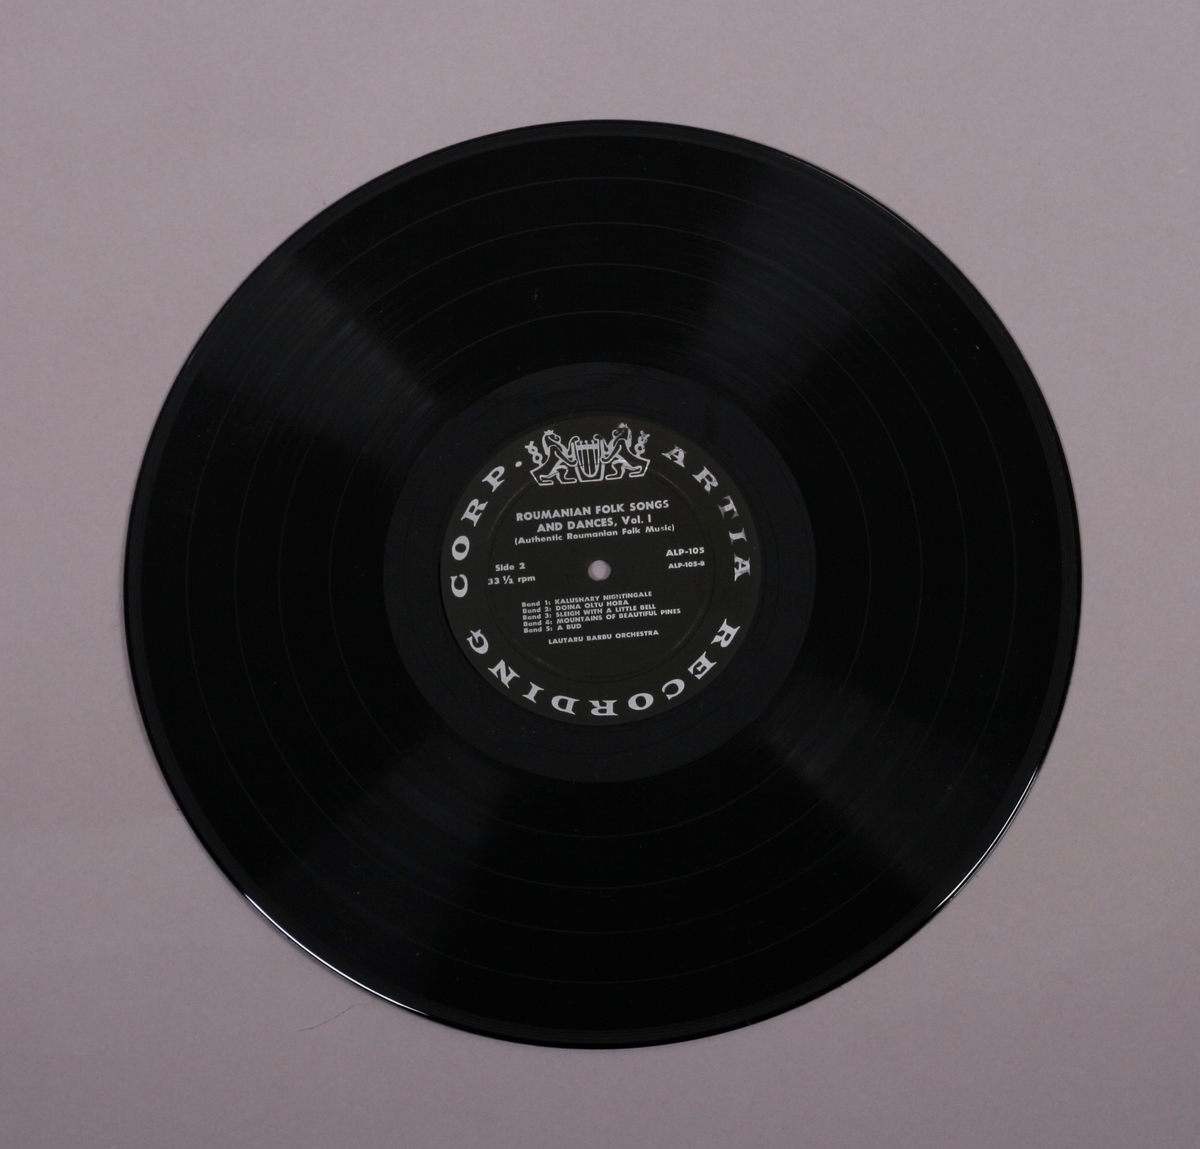 Grammofonplate i svart vinyl. Plata ligger i en uoriginal papirlomme med plastfôr merket "Angel Records".